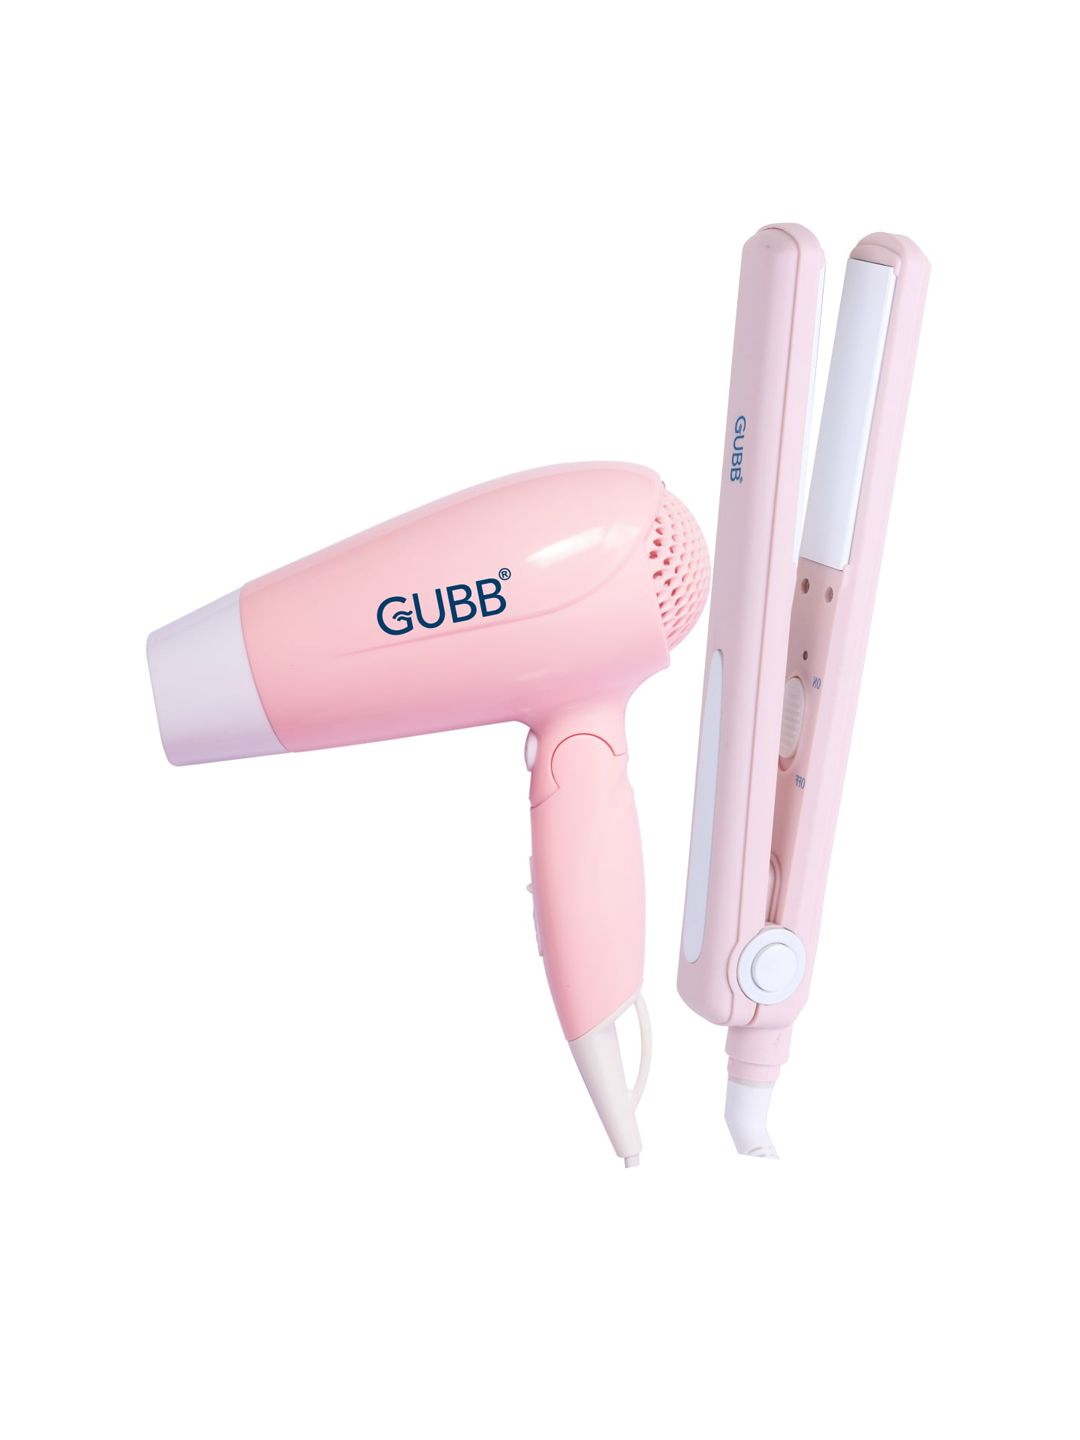 GUBB Set of Hair Dryer & Straightener - Pink Price in India